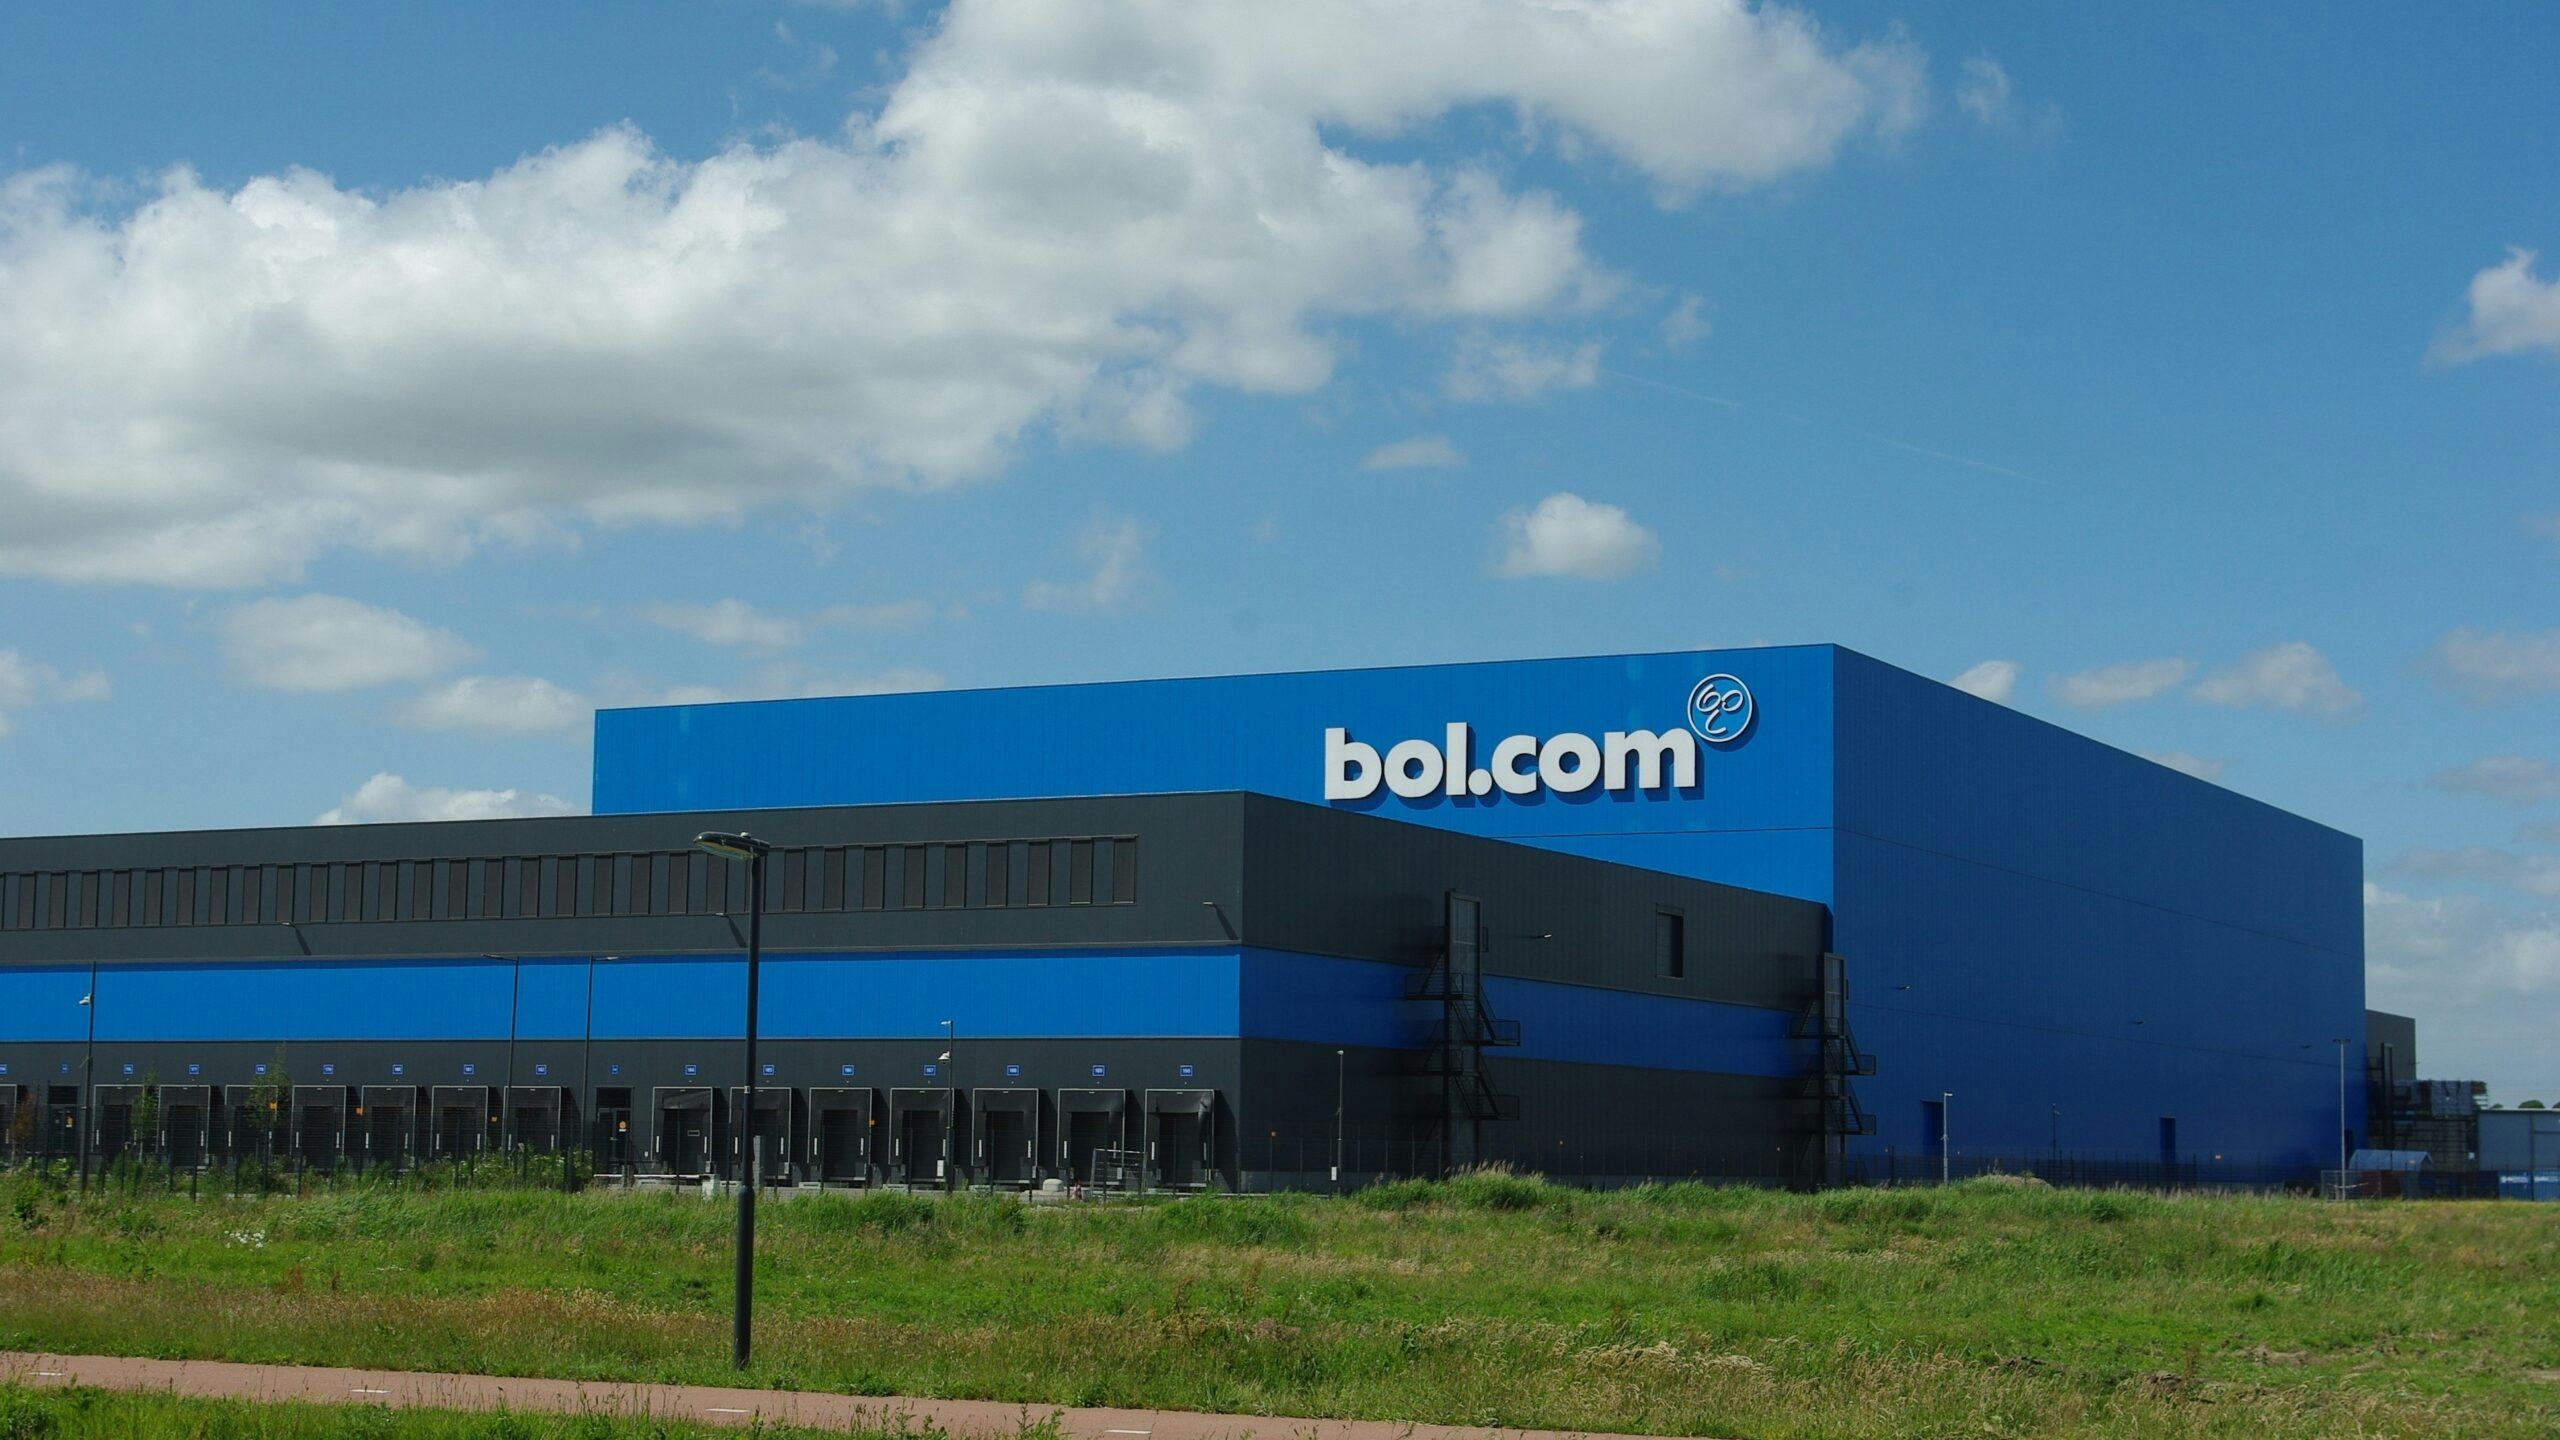 Komst Bol.com dc naar Lelystad levert 'duizenden banen' op